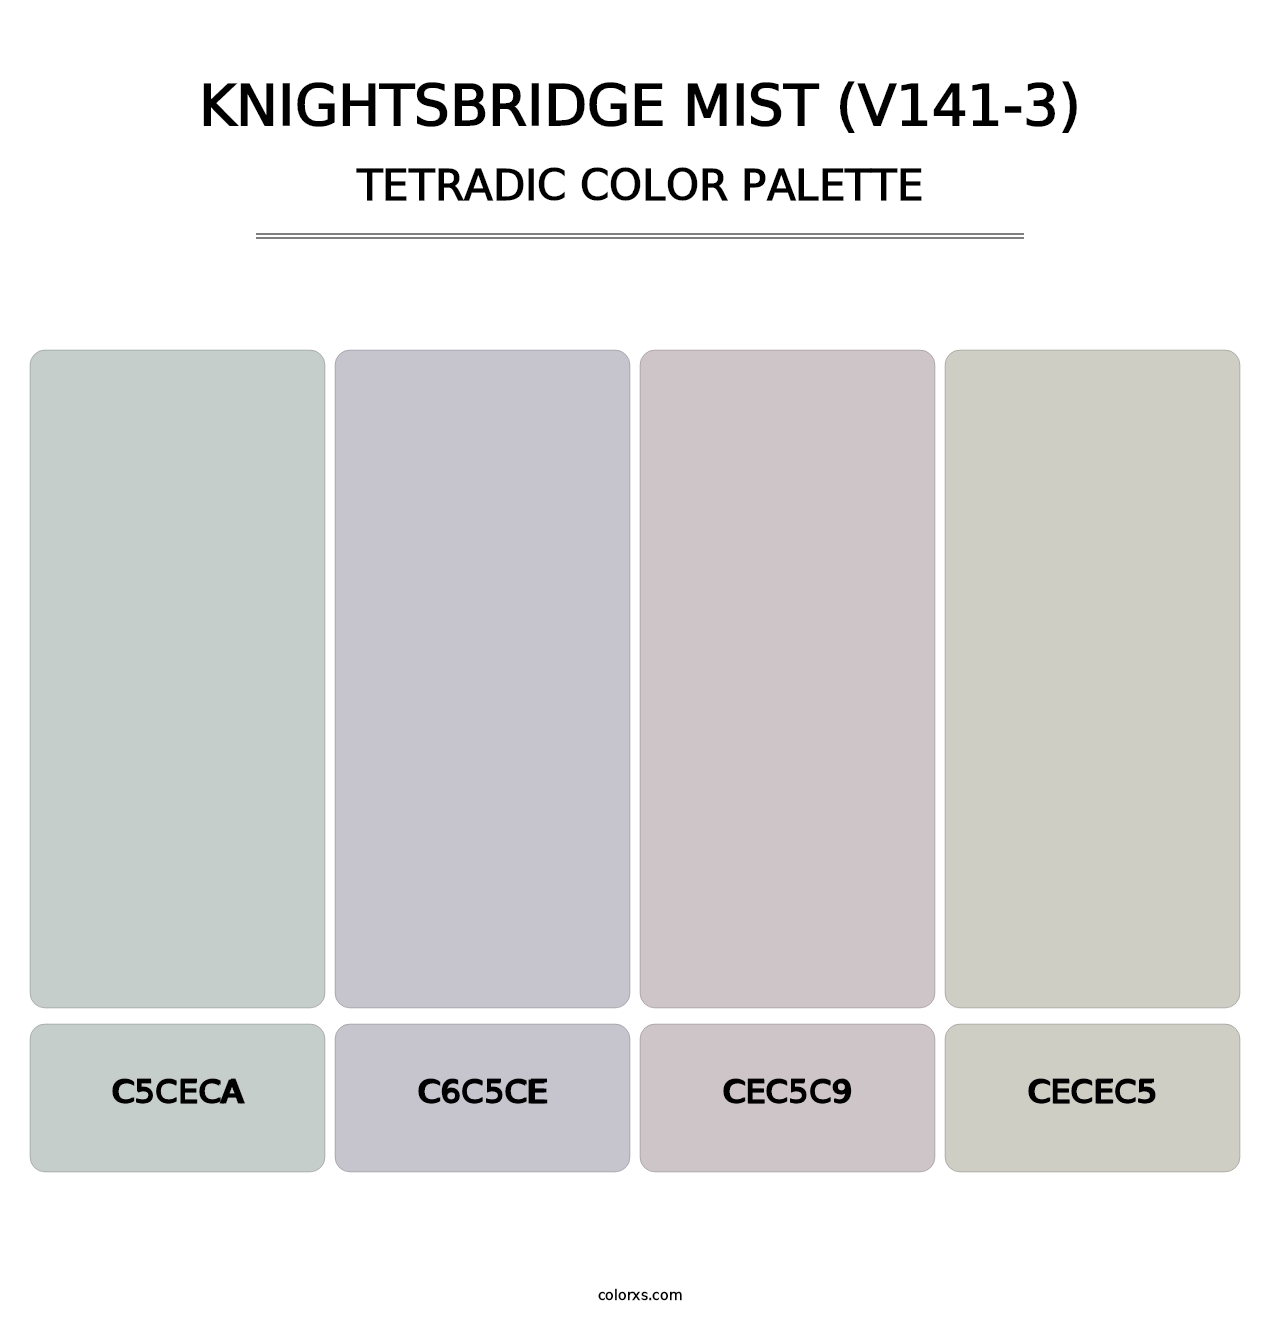 Knightsbridge Mist (V141-3) - Tetradic Color Palette